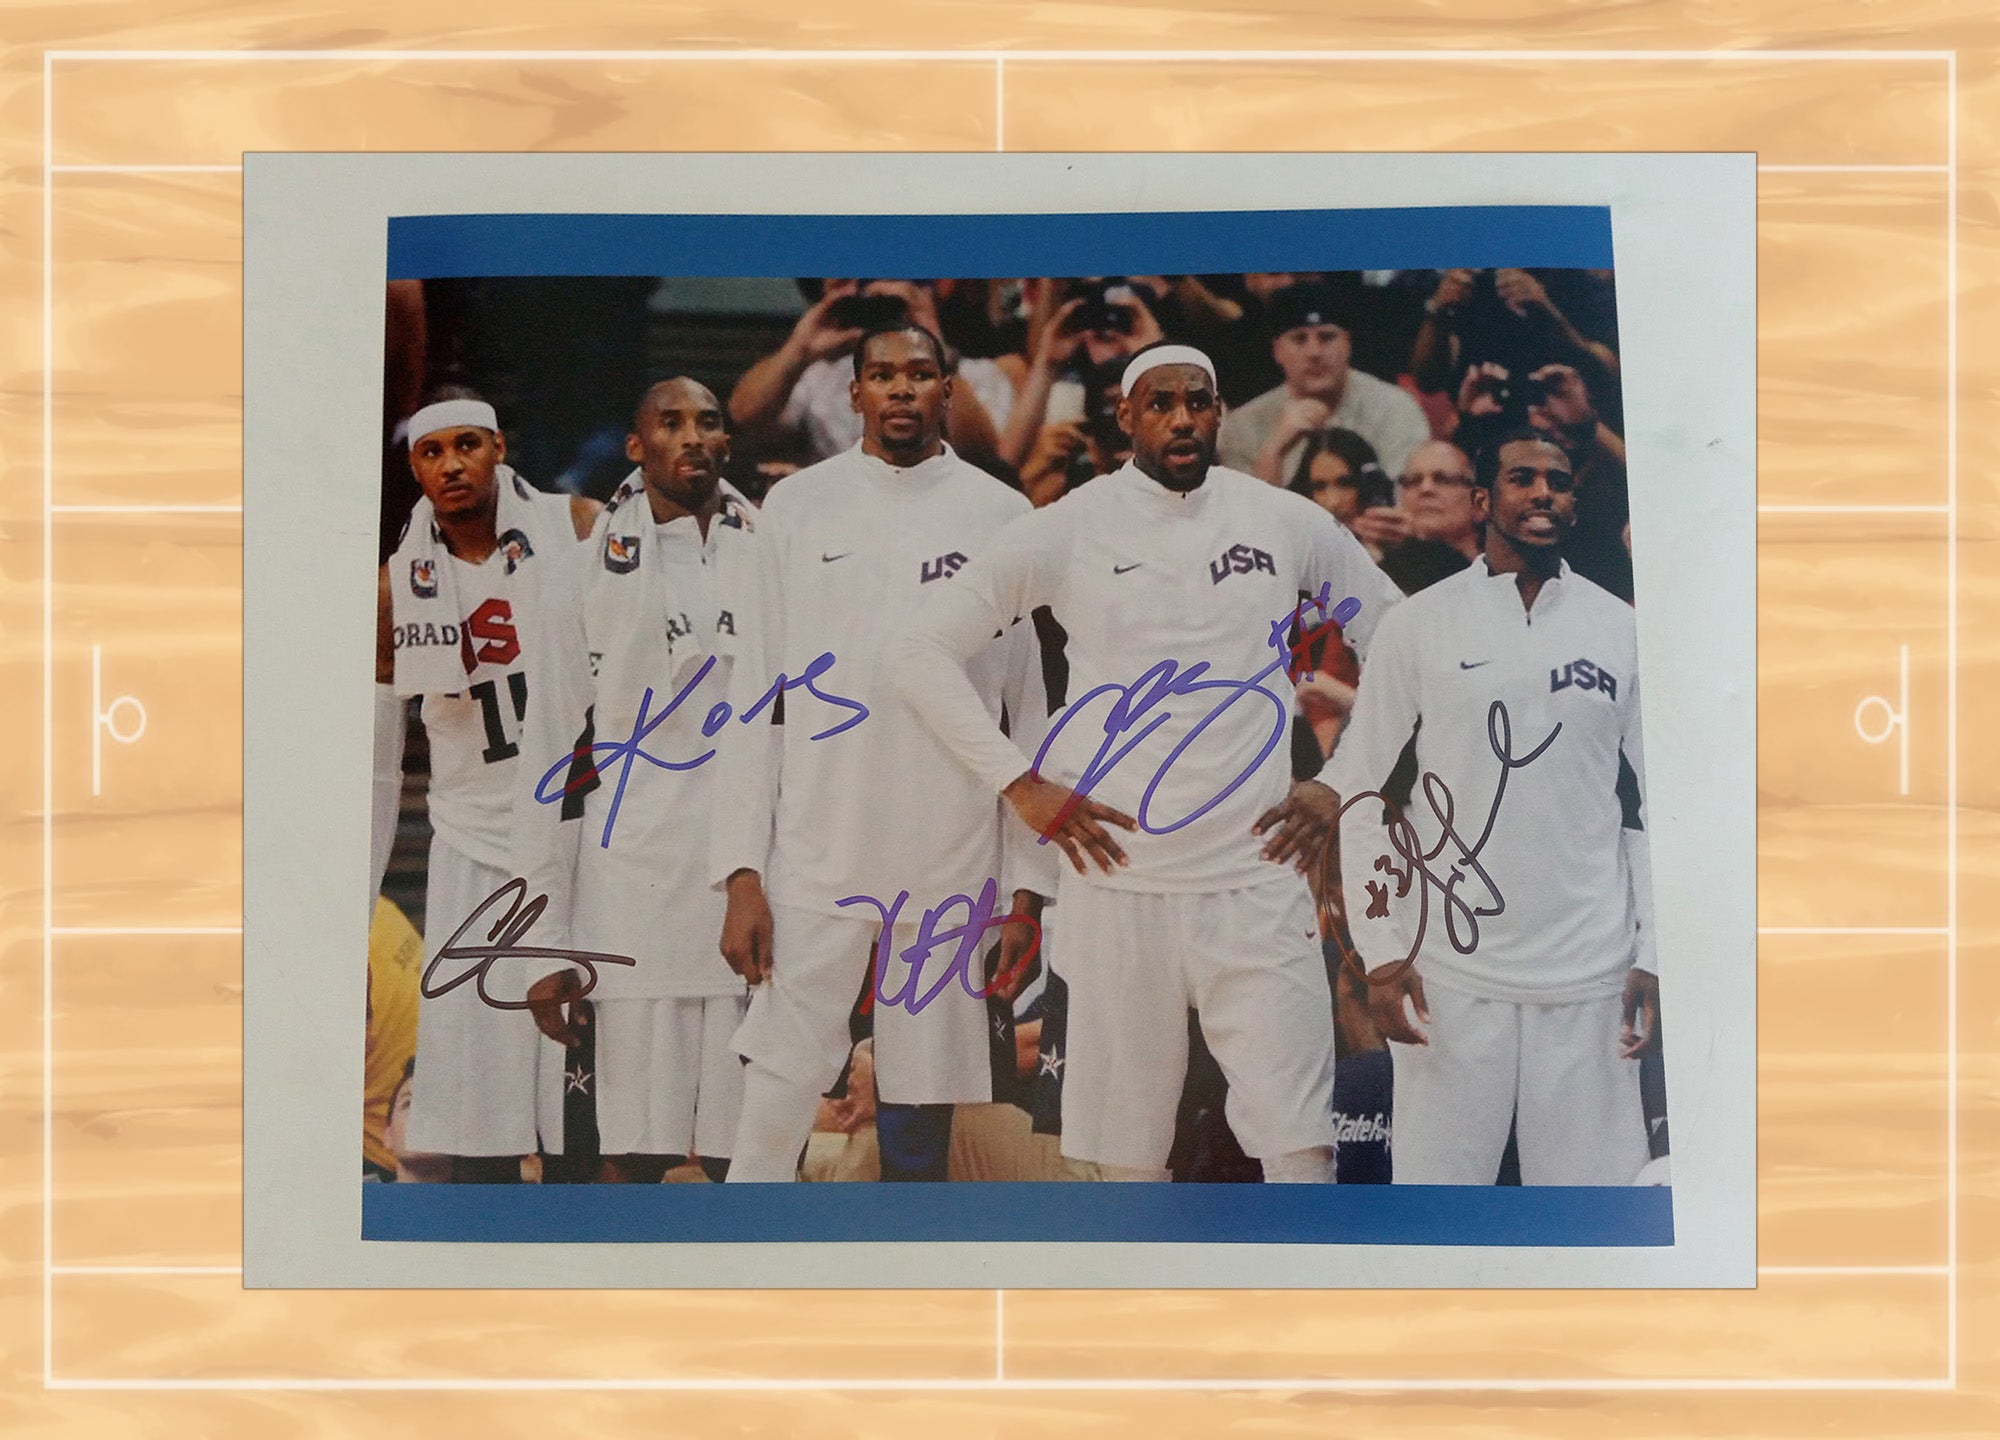 Kobe Bryant, LeBron James, Dwyane Wade and Carmelo Anthony Team USA 8 x 10 photo signed with proof